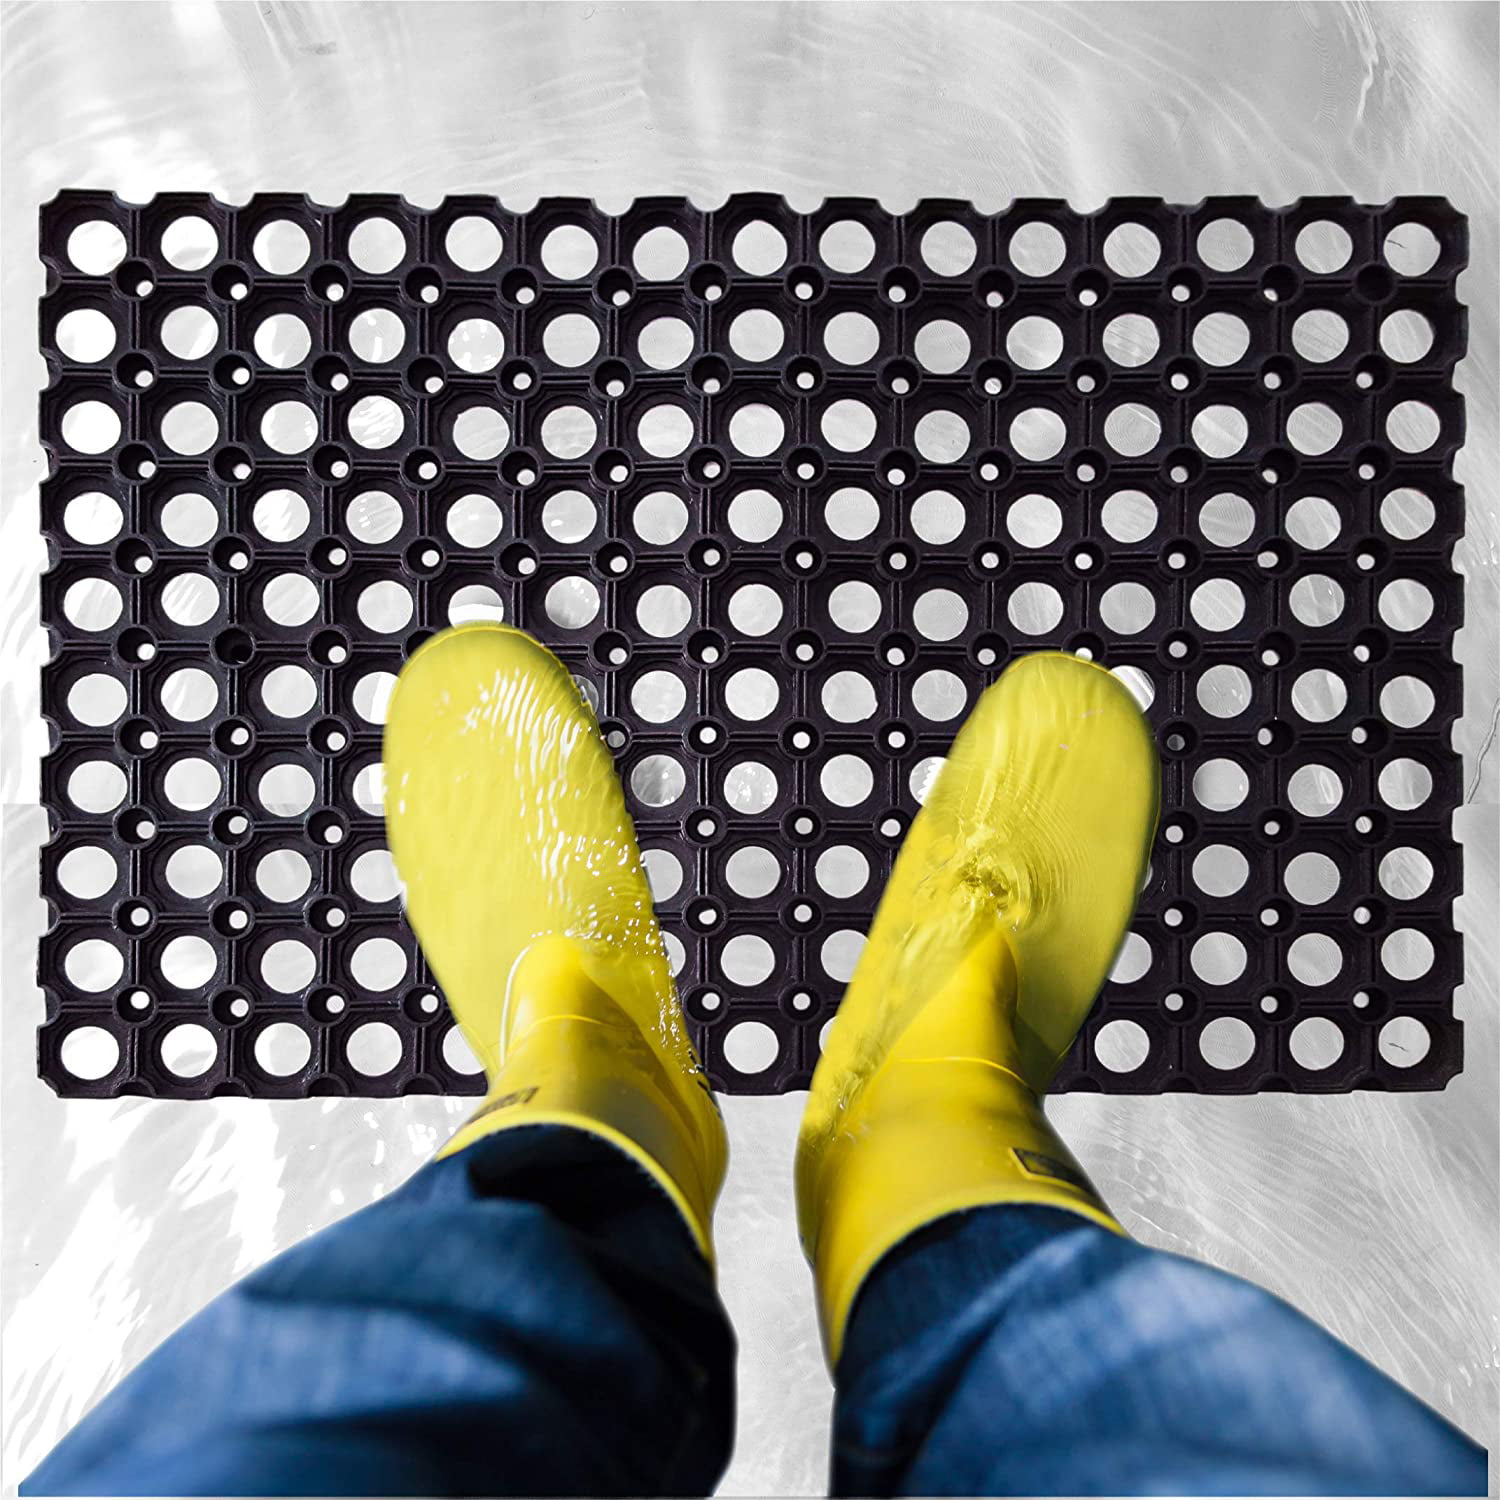 Rubber Drainage Floor Mat 83x35 Kitchen Mat Non-Slip for